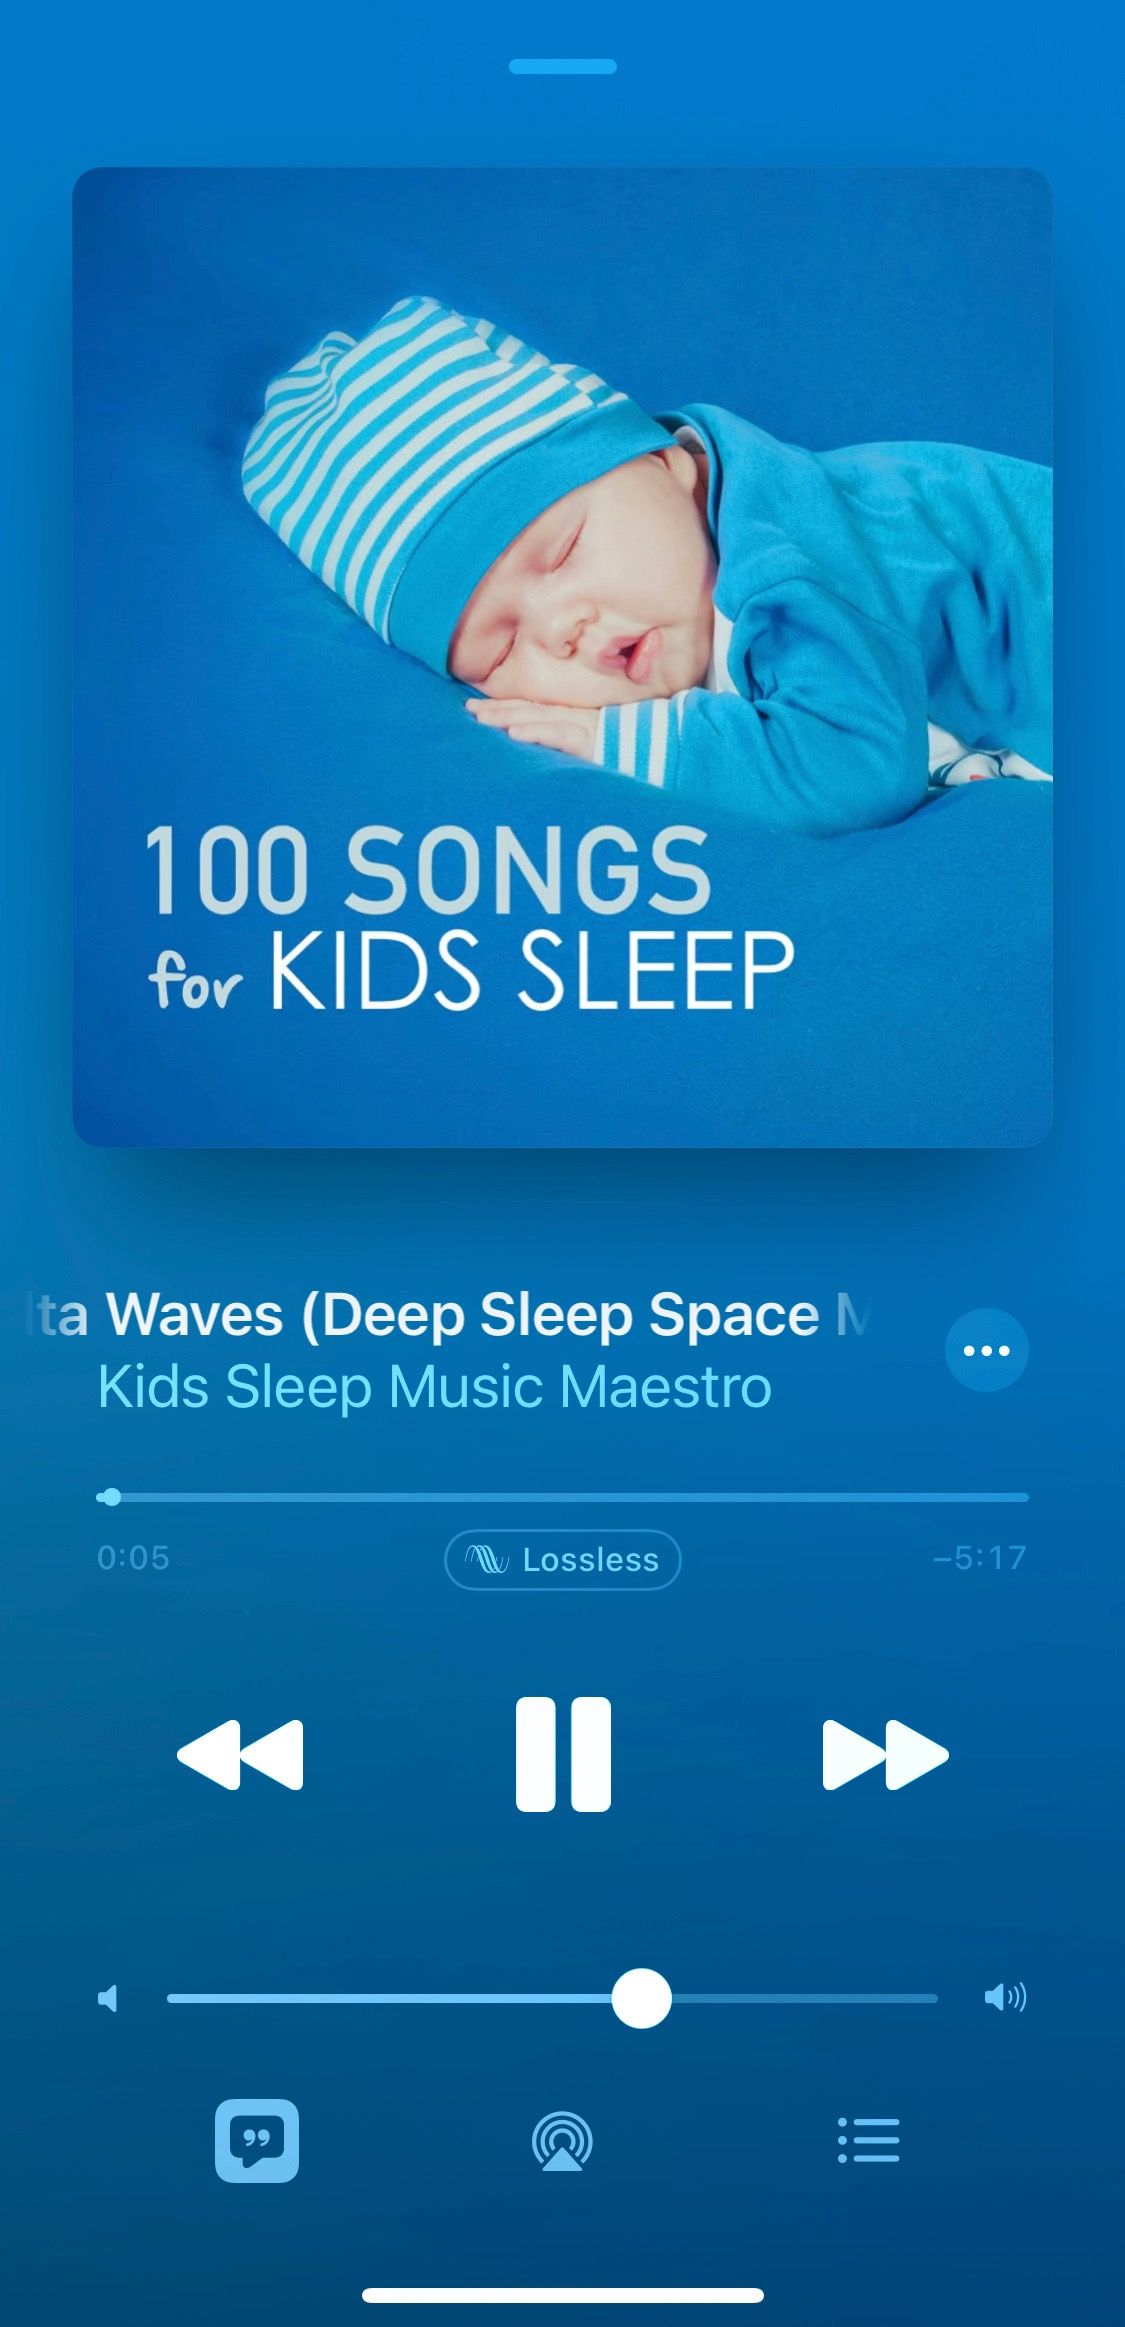 Screenshot of Apple Music showing Kids Sleep Music Maestro play screen